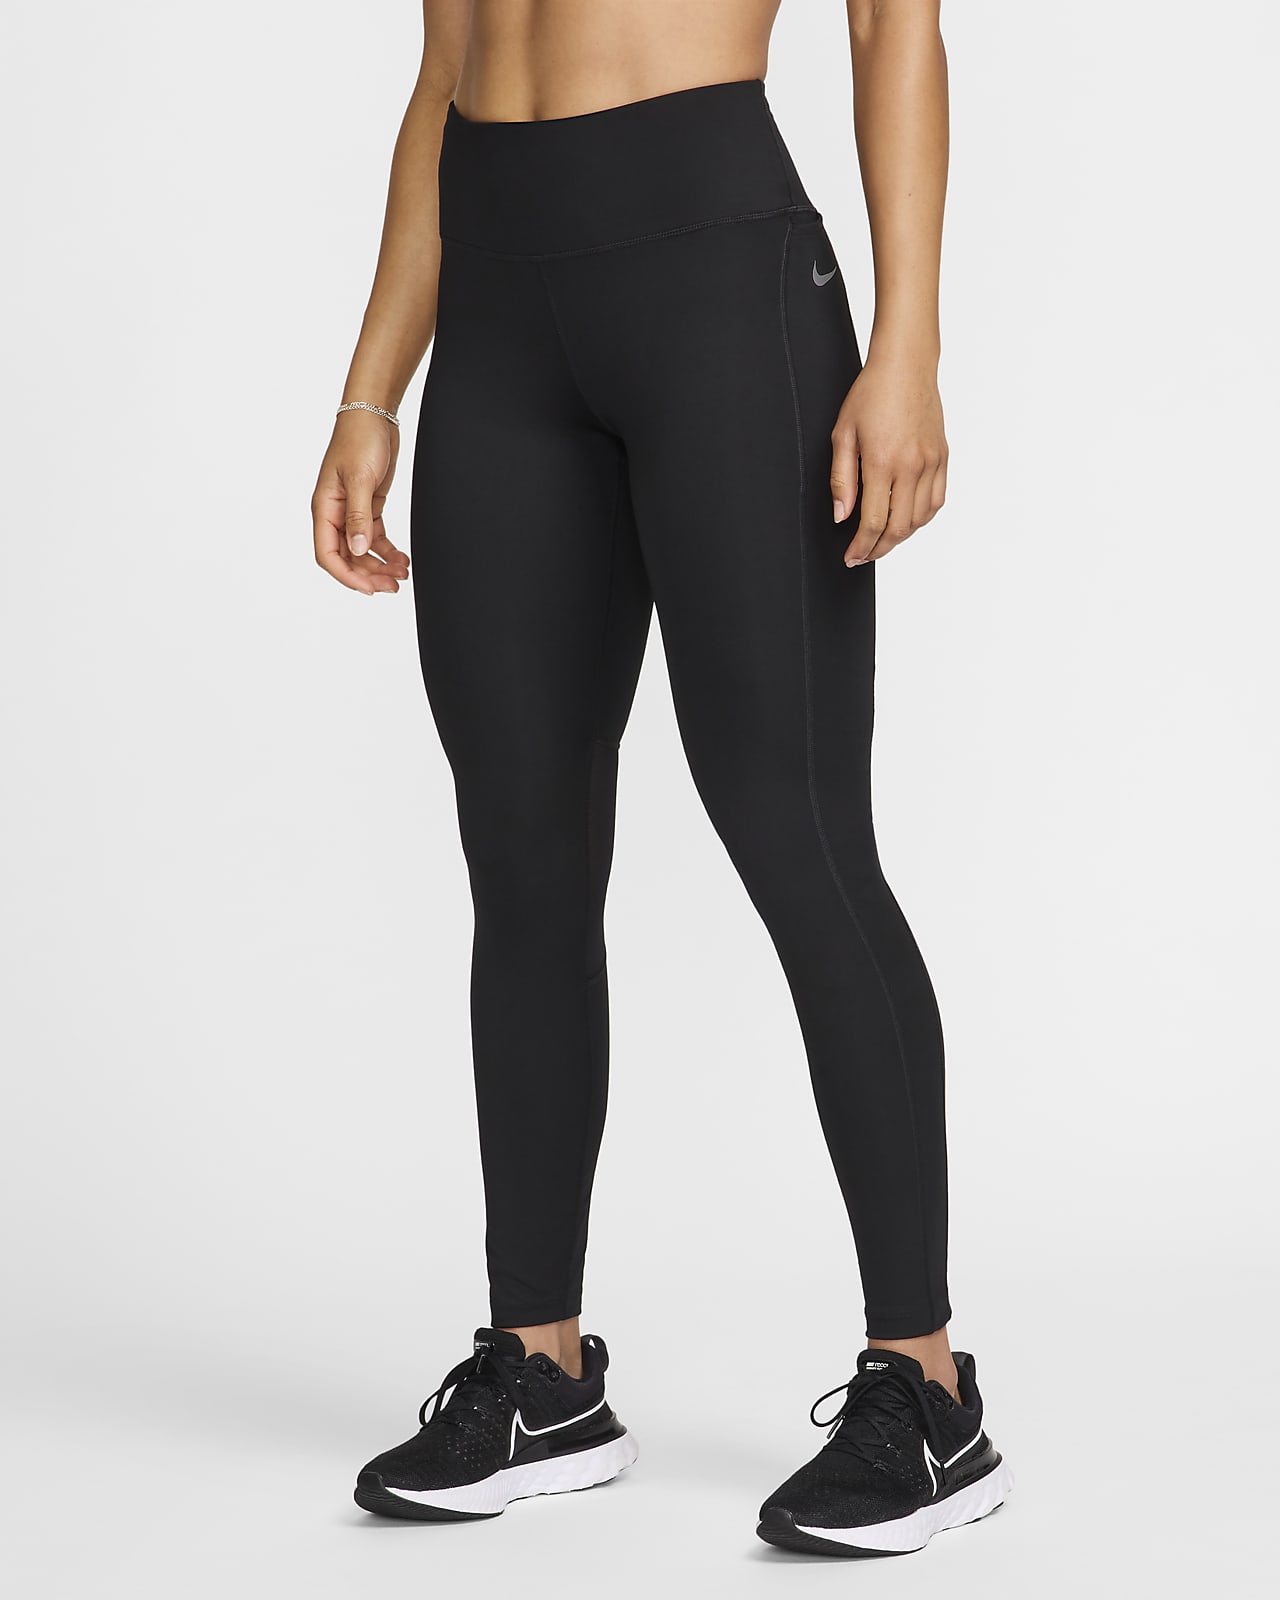  Nike - Mallas deportivas de mujer, Gris, XXL : Ropa